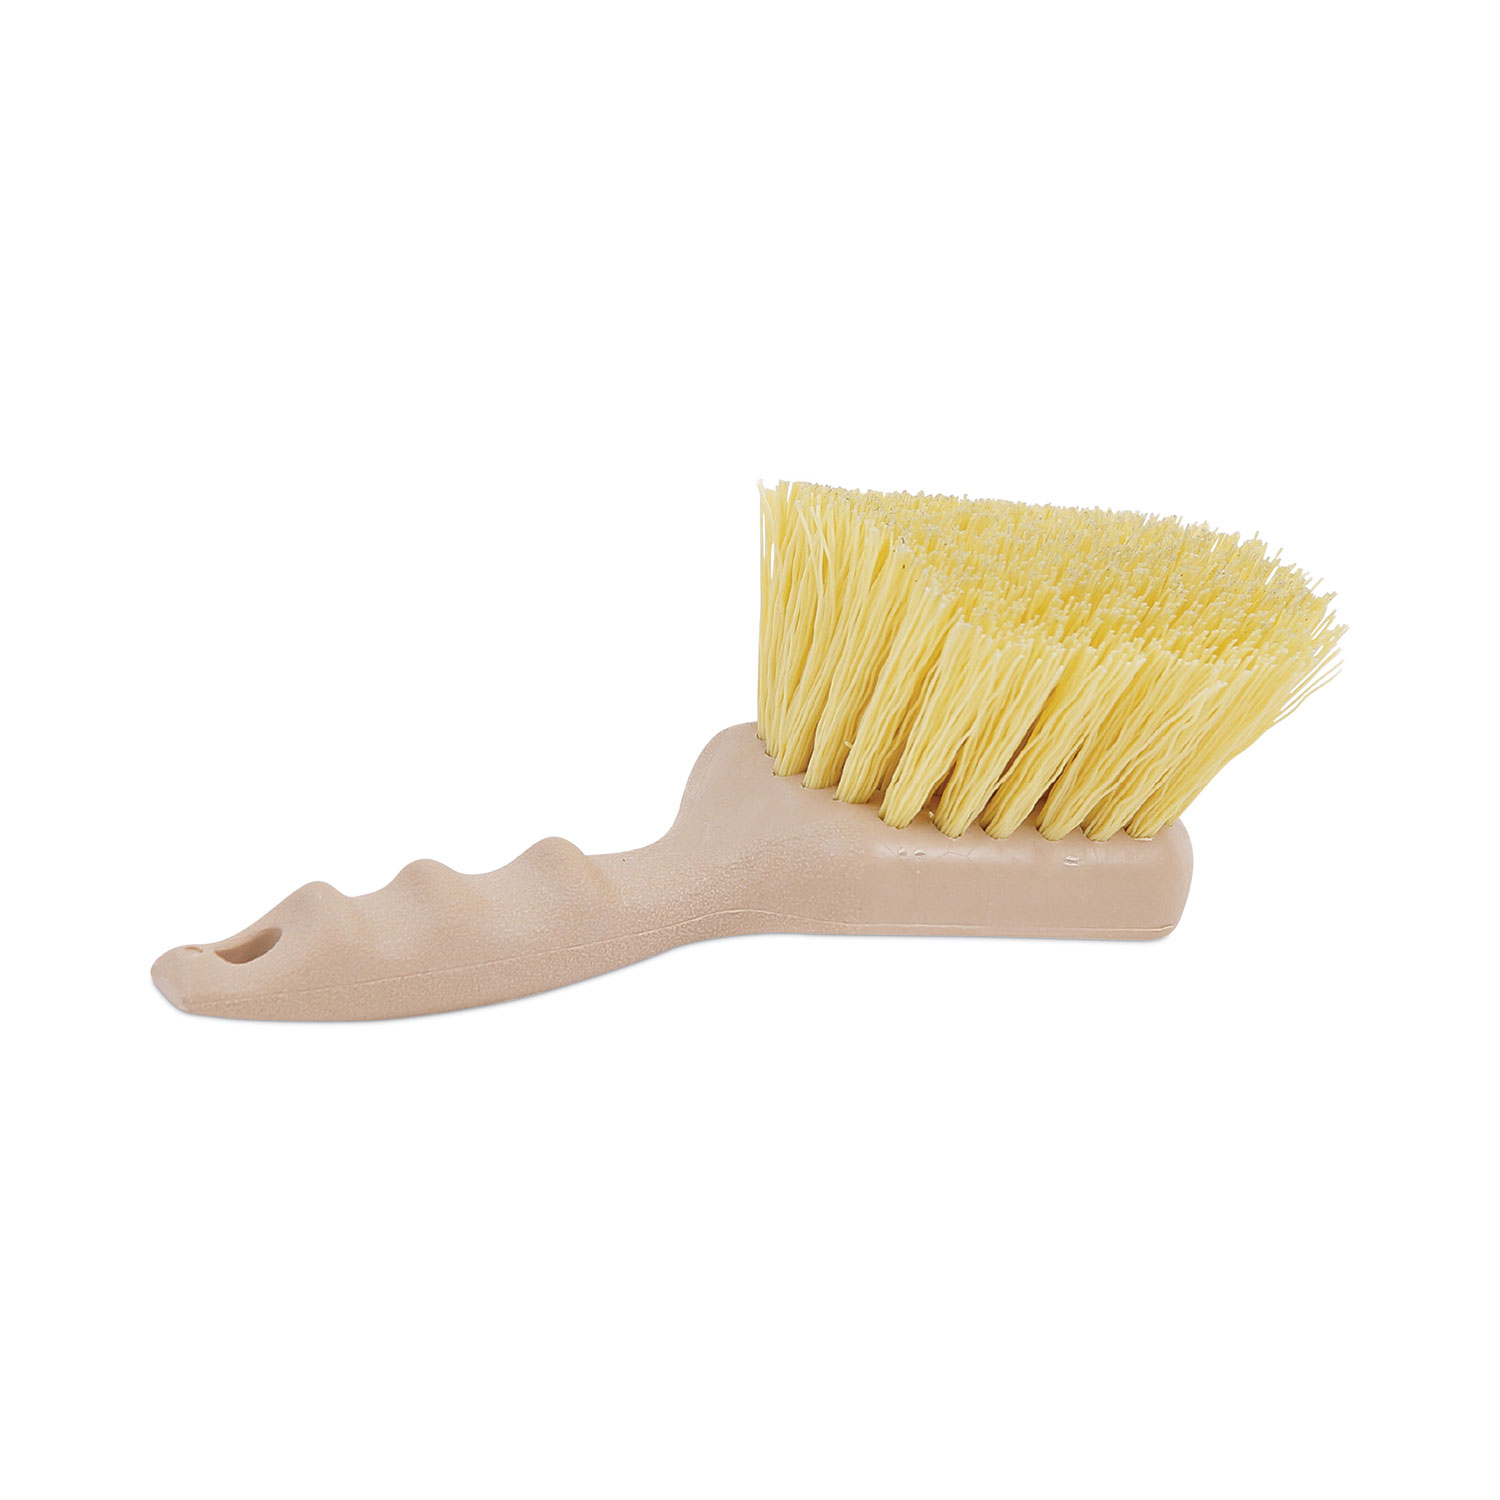 Utility Brush, Cream Polypropylene Bristles, 5.5 Brush, 3